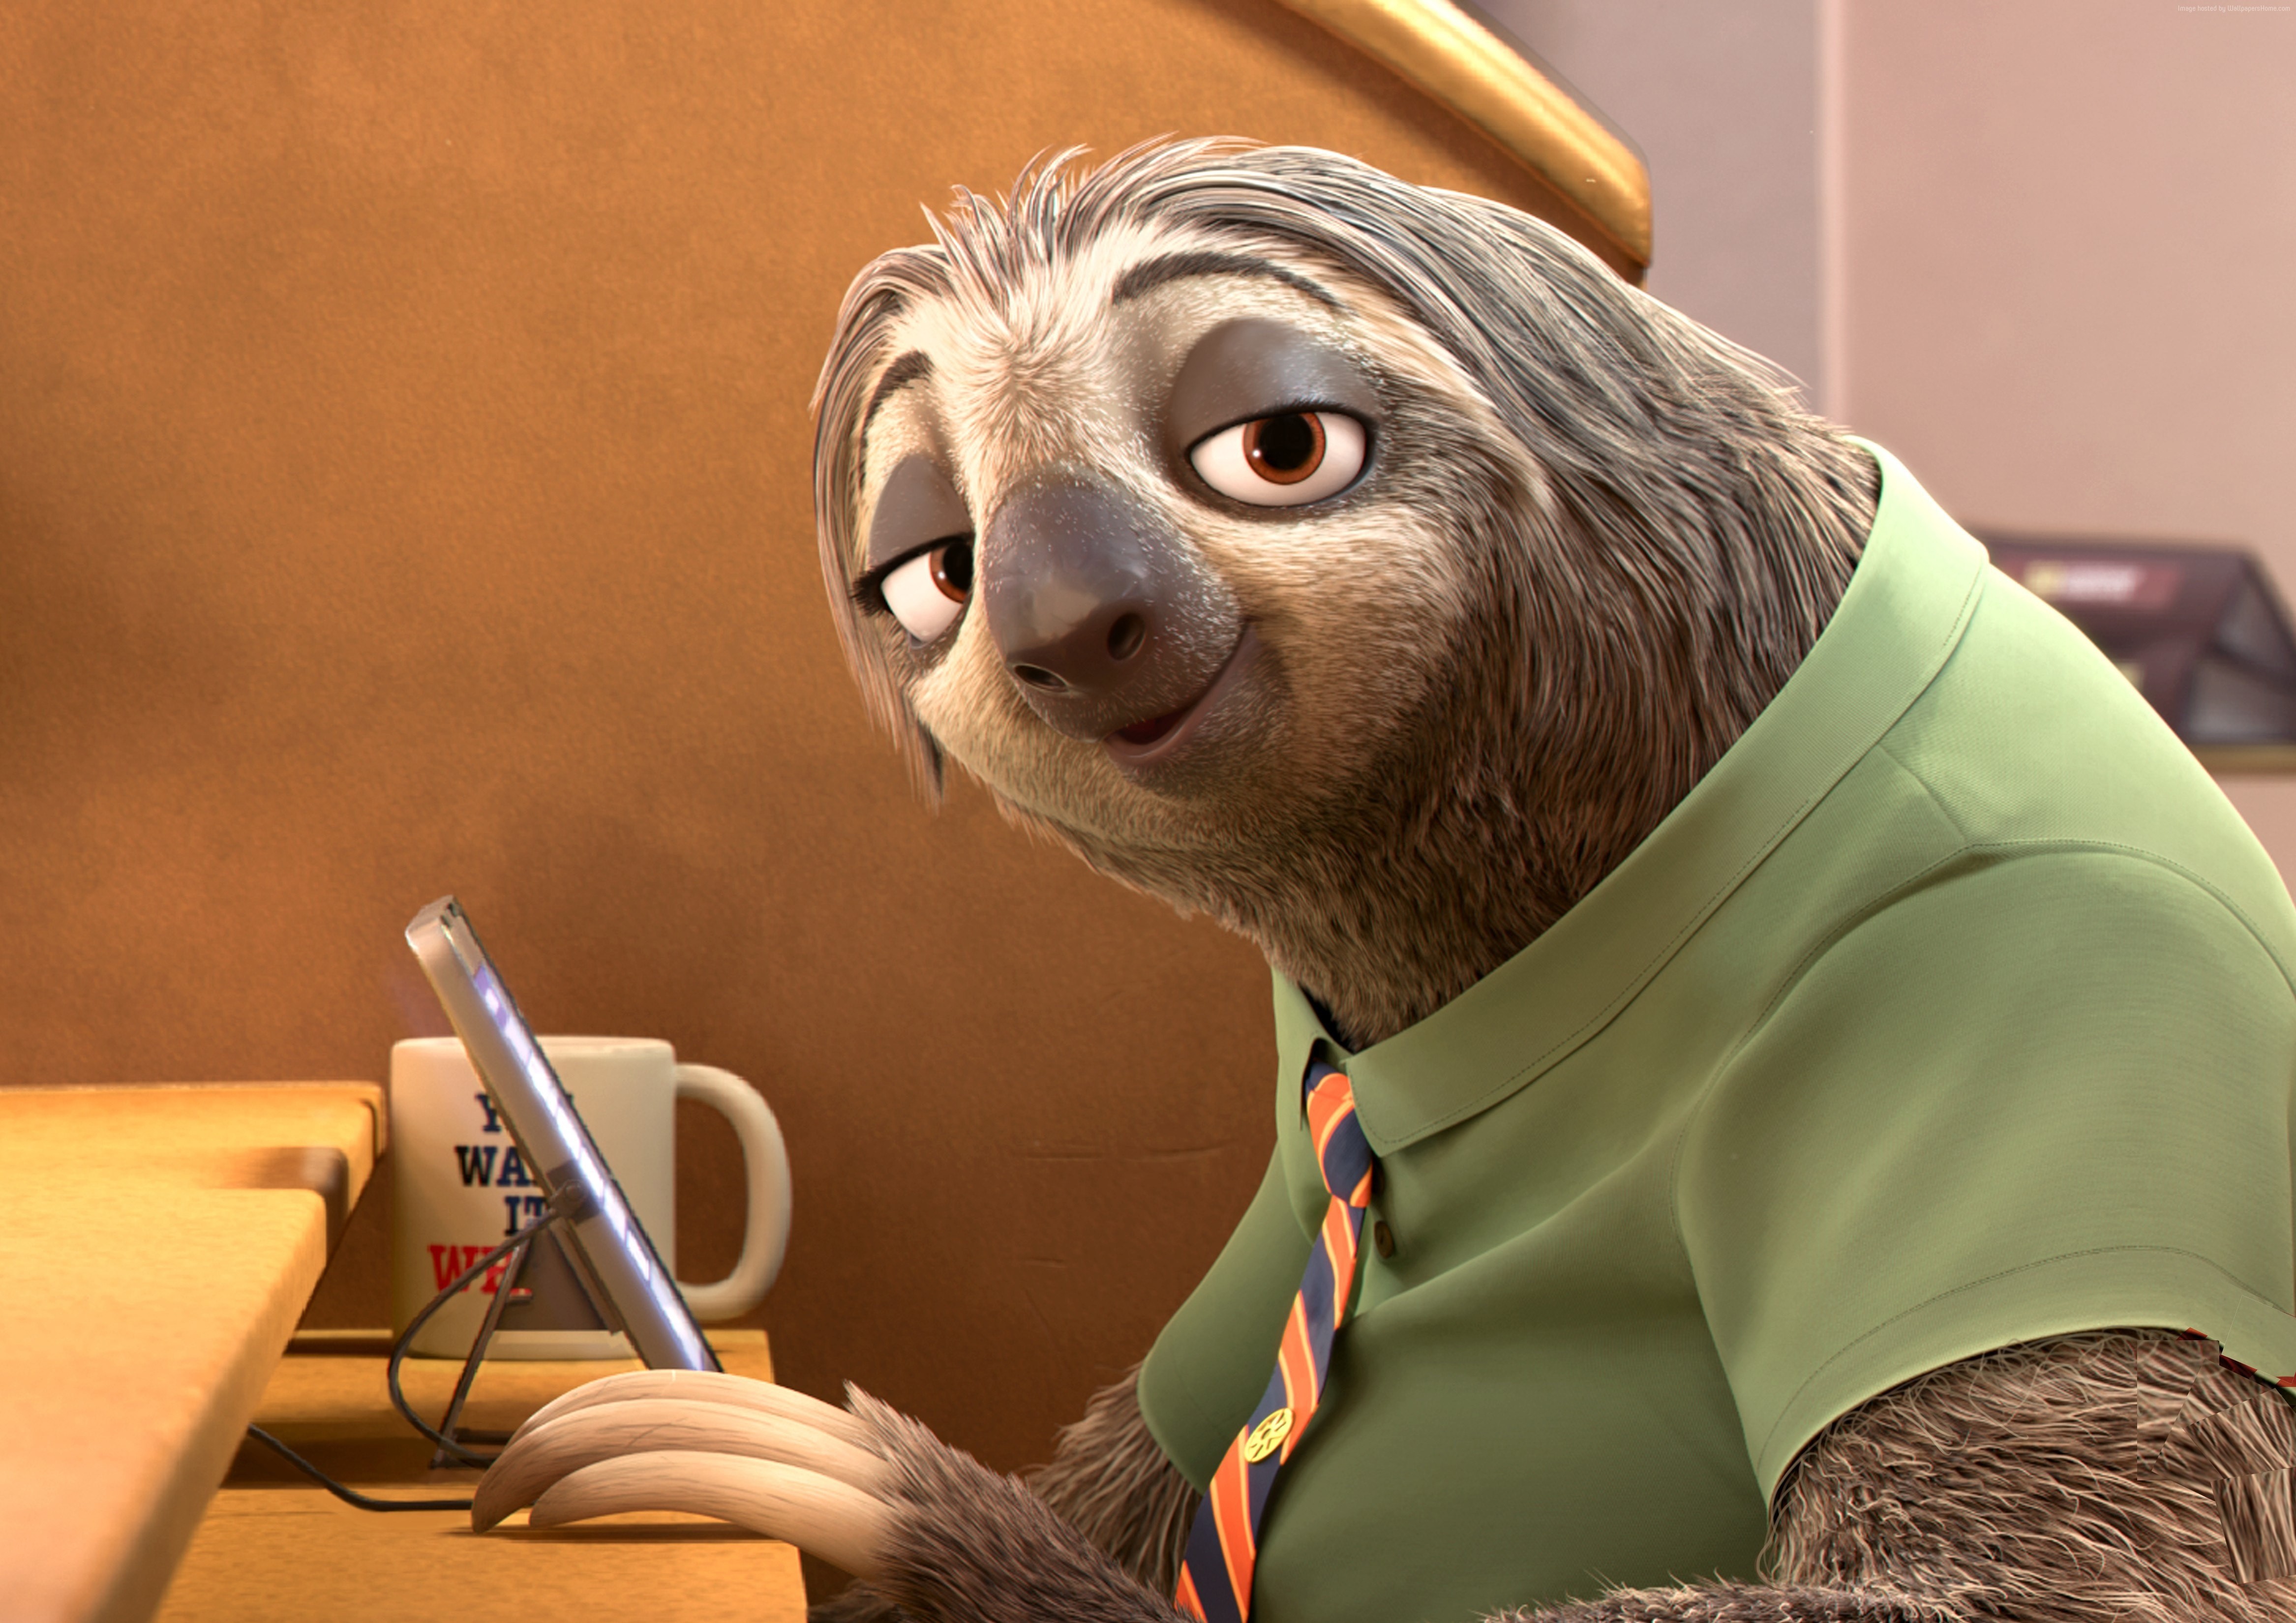 Wallpaper Movies Animation Zootopia Sloth